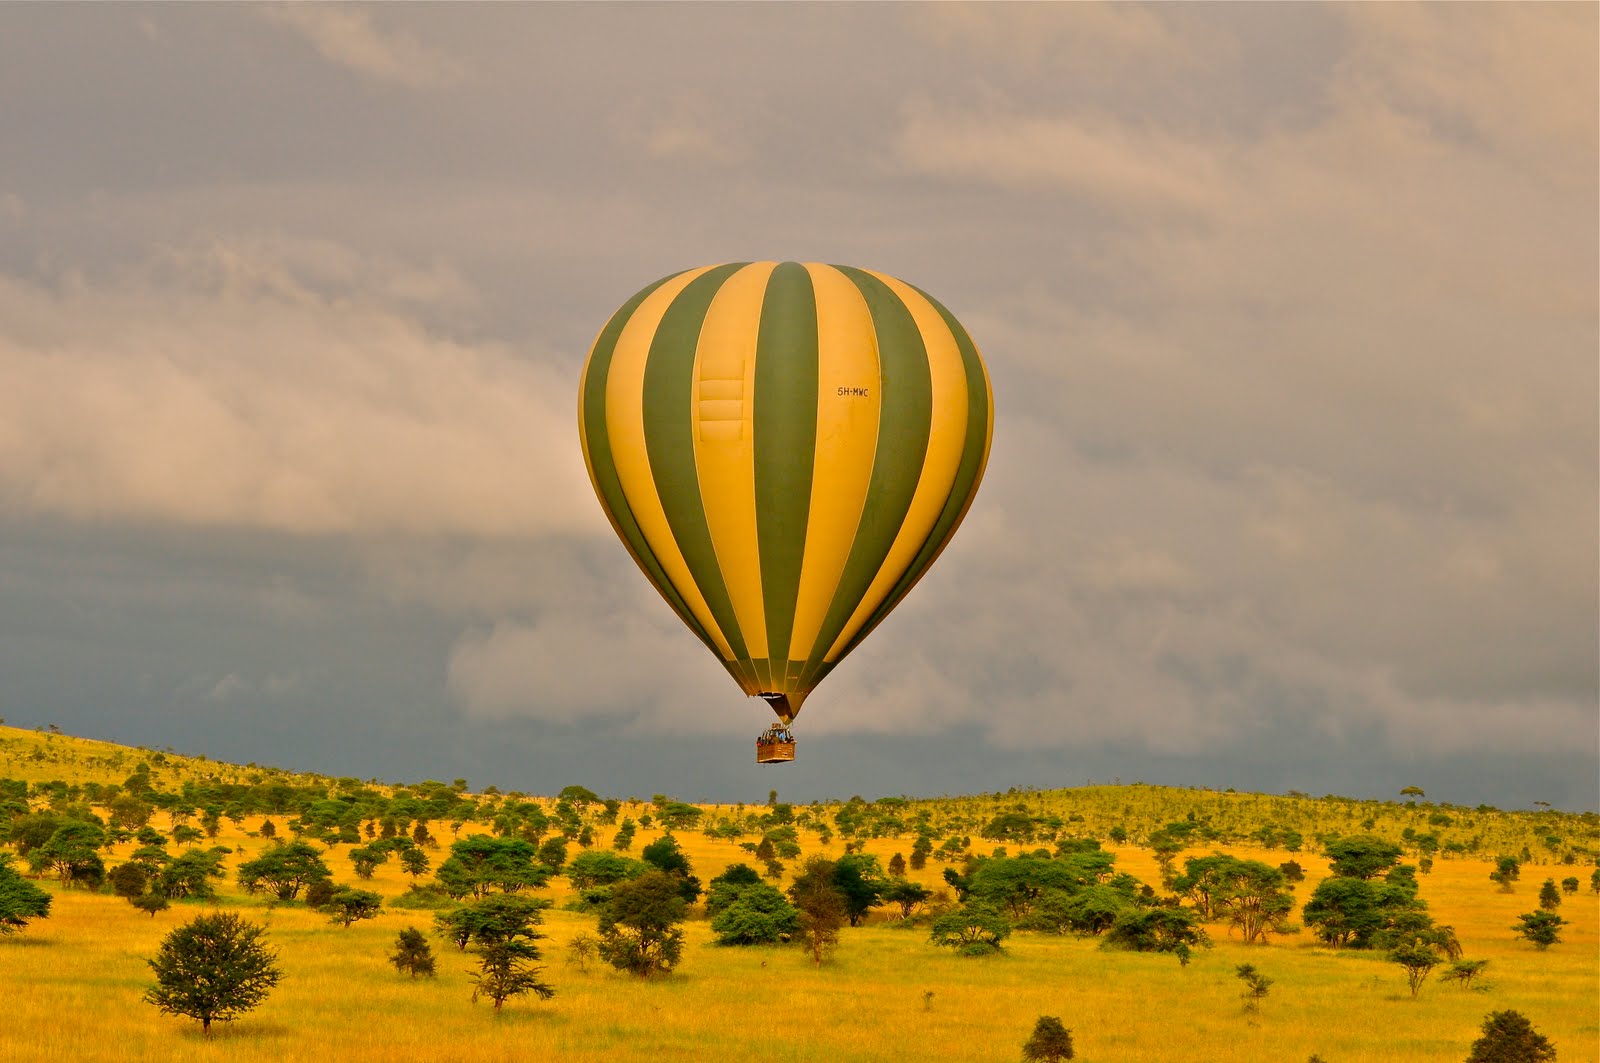 Ngorongoro hot air balloon safari